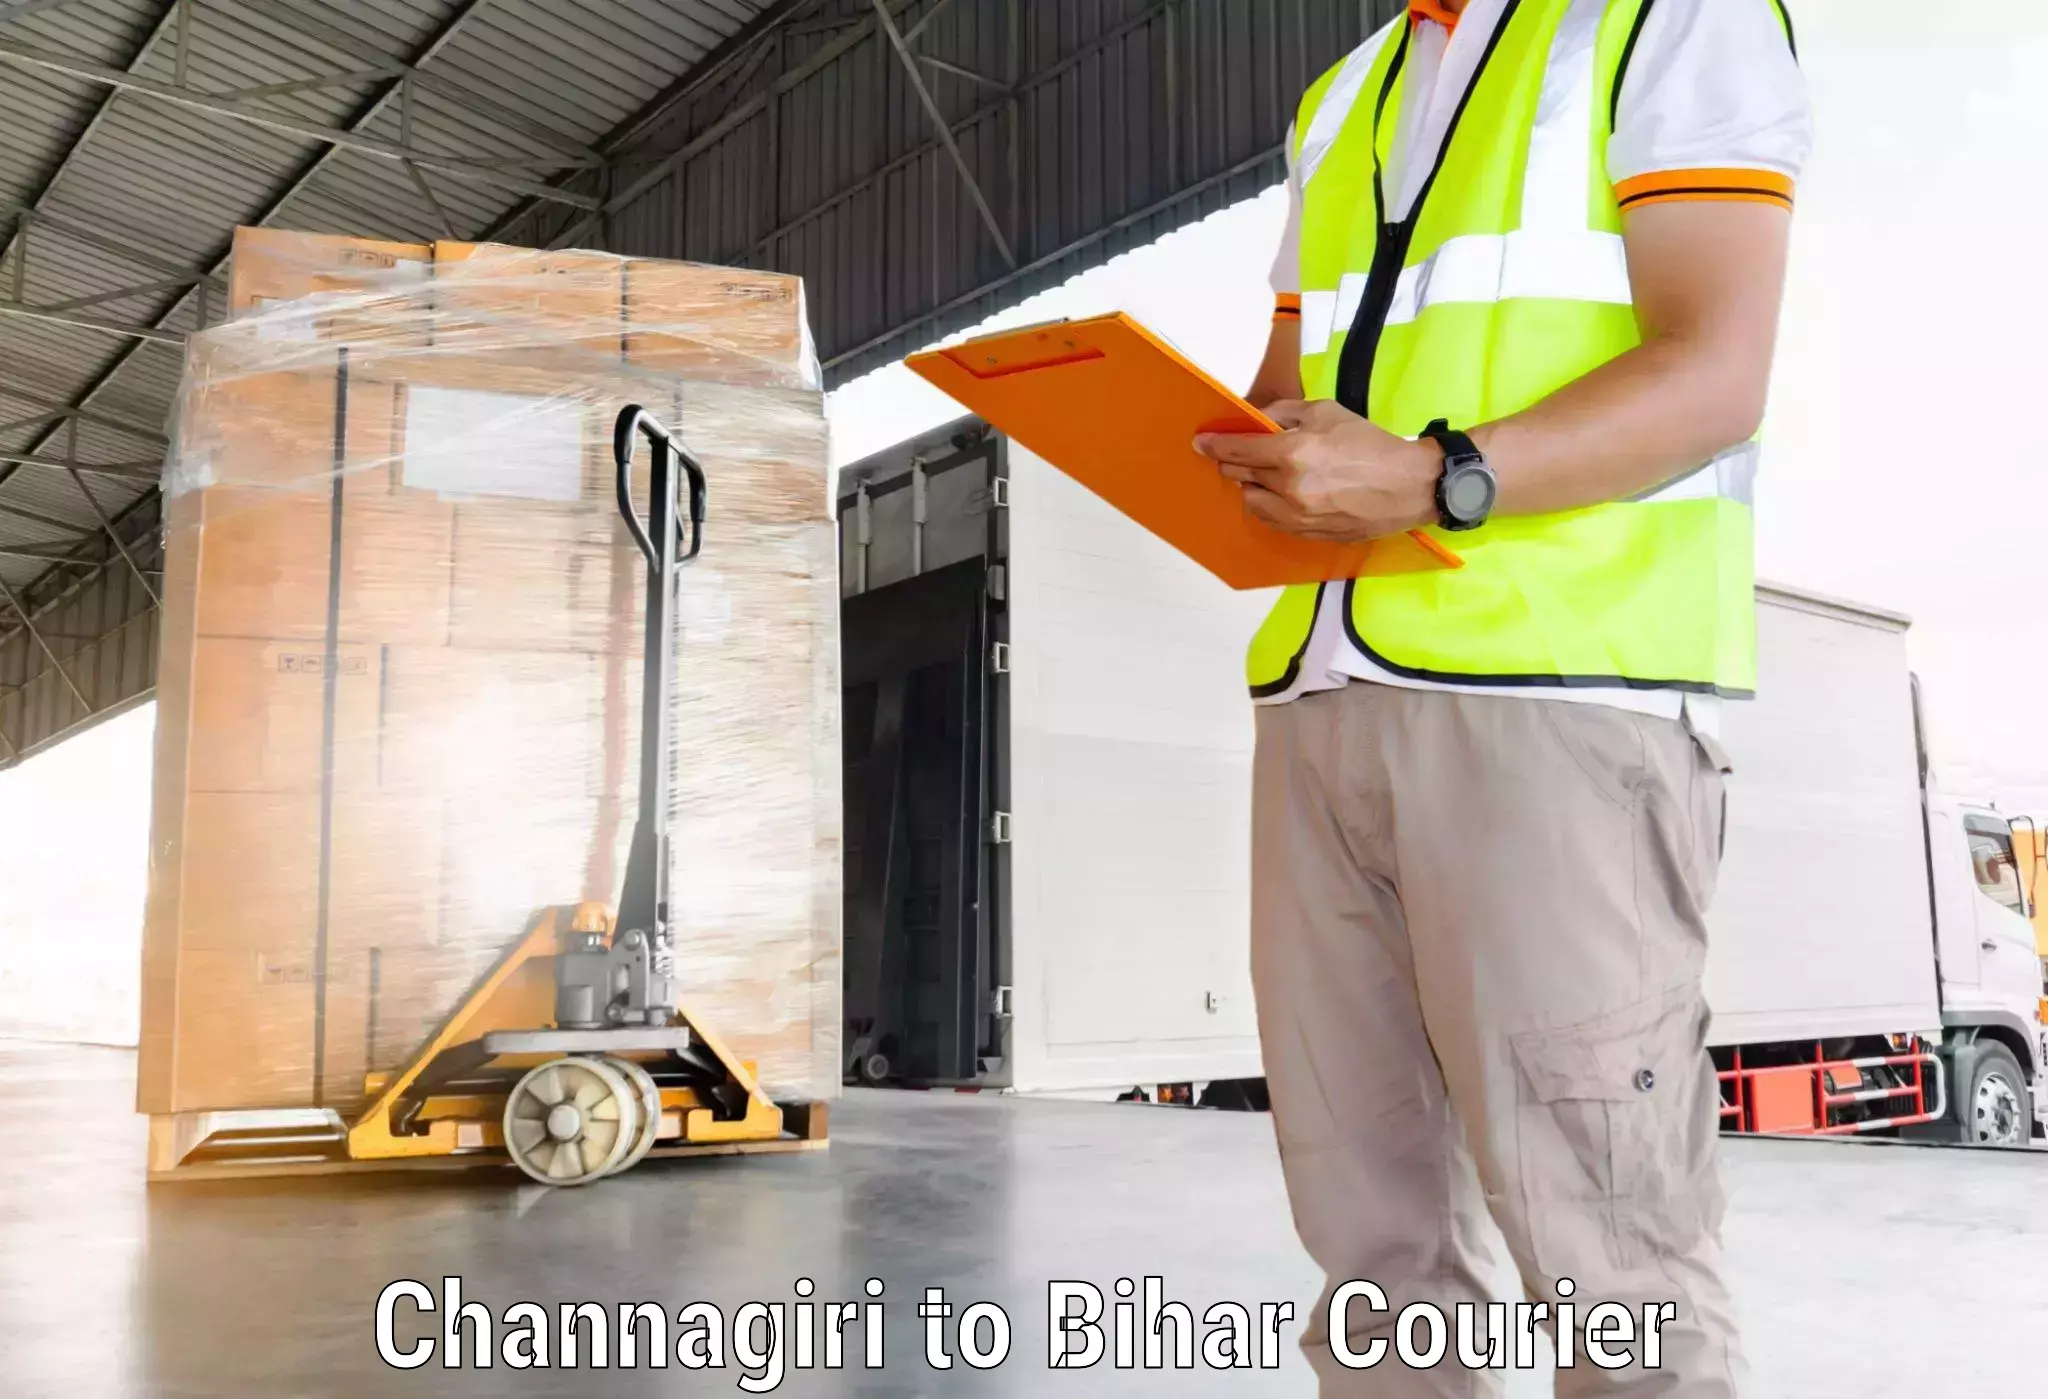 Courier service comparison Channagiri to Purnia